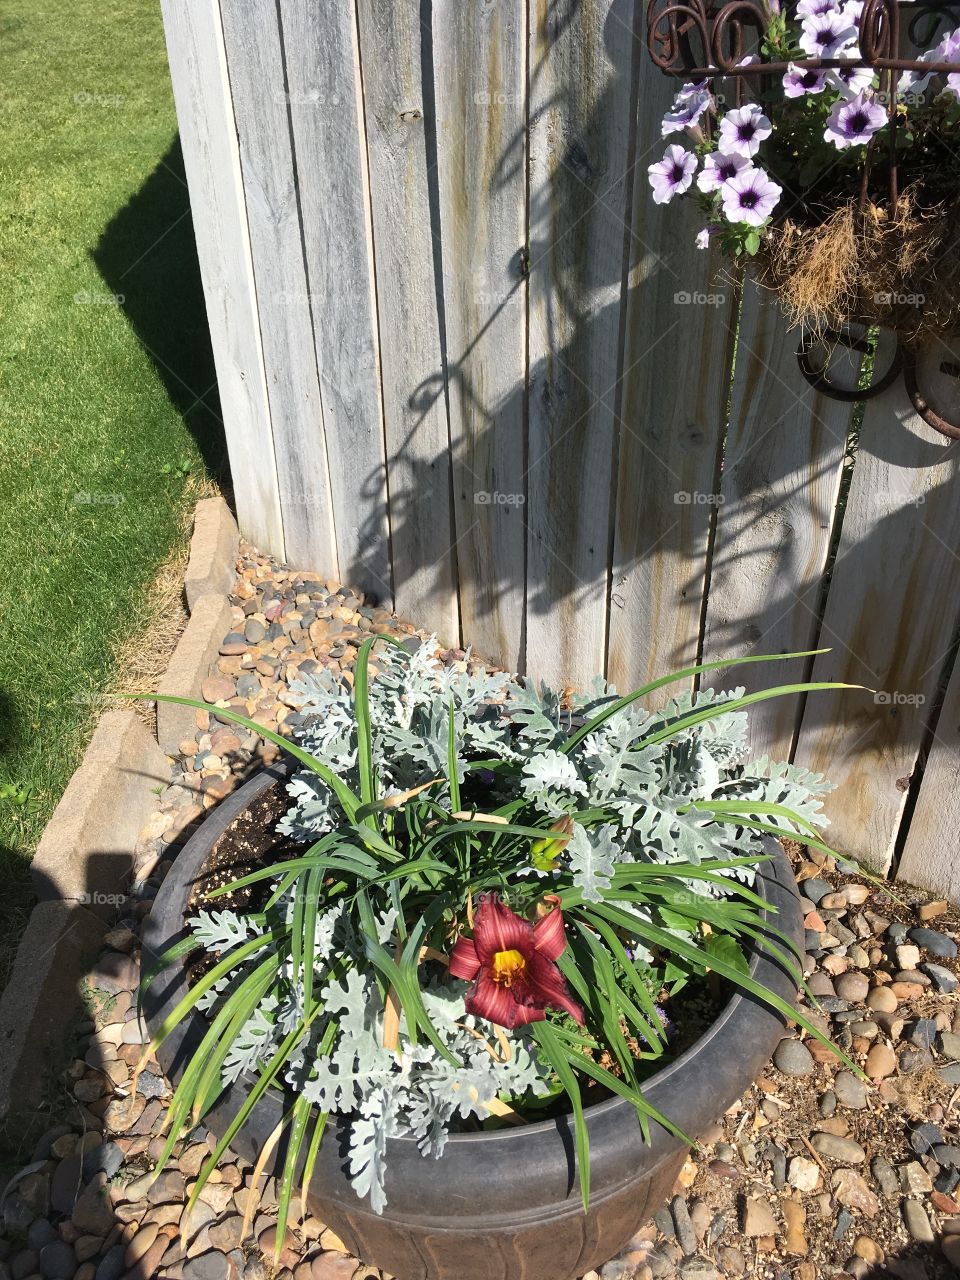 Flowers in a flower planter. 